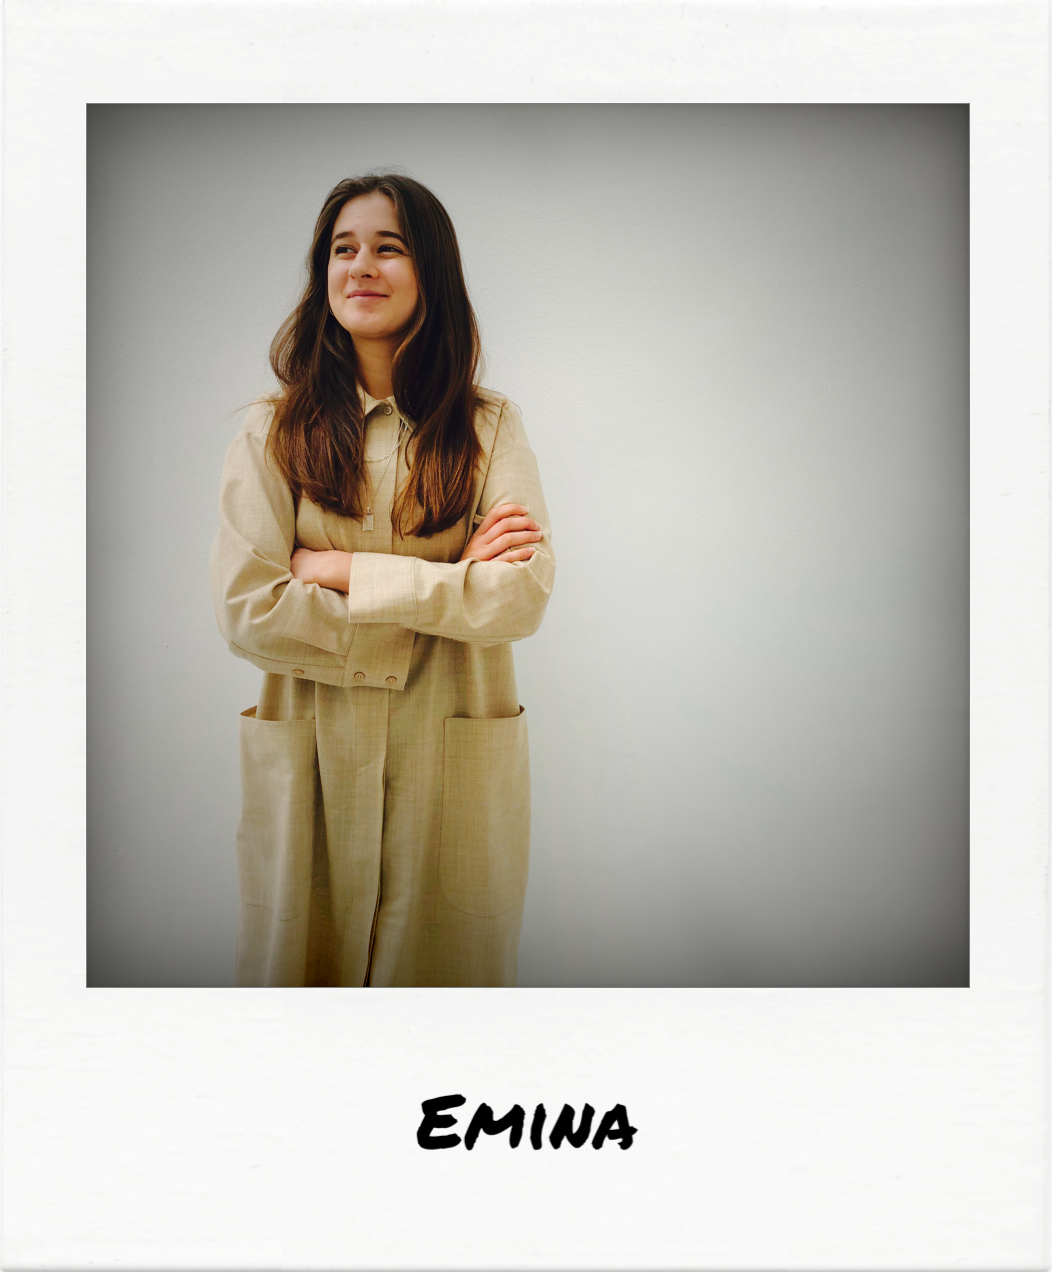 Emina, 21, studies IMK at CBS